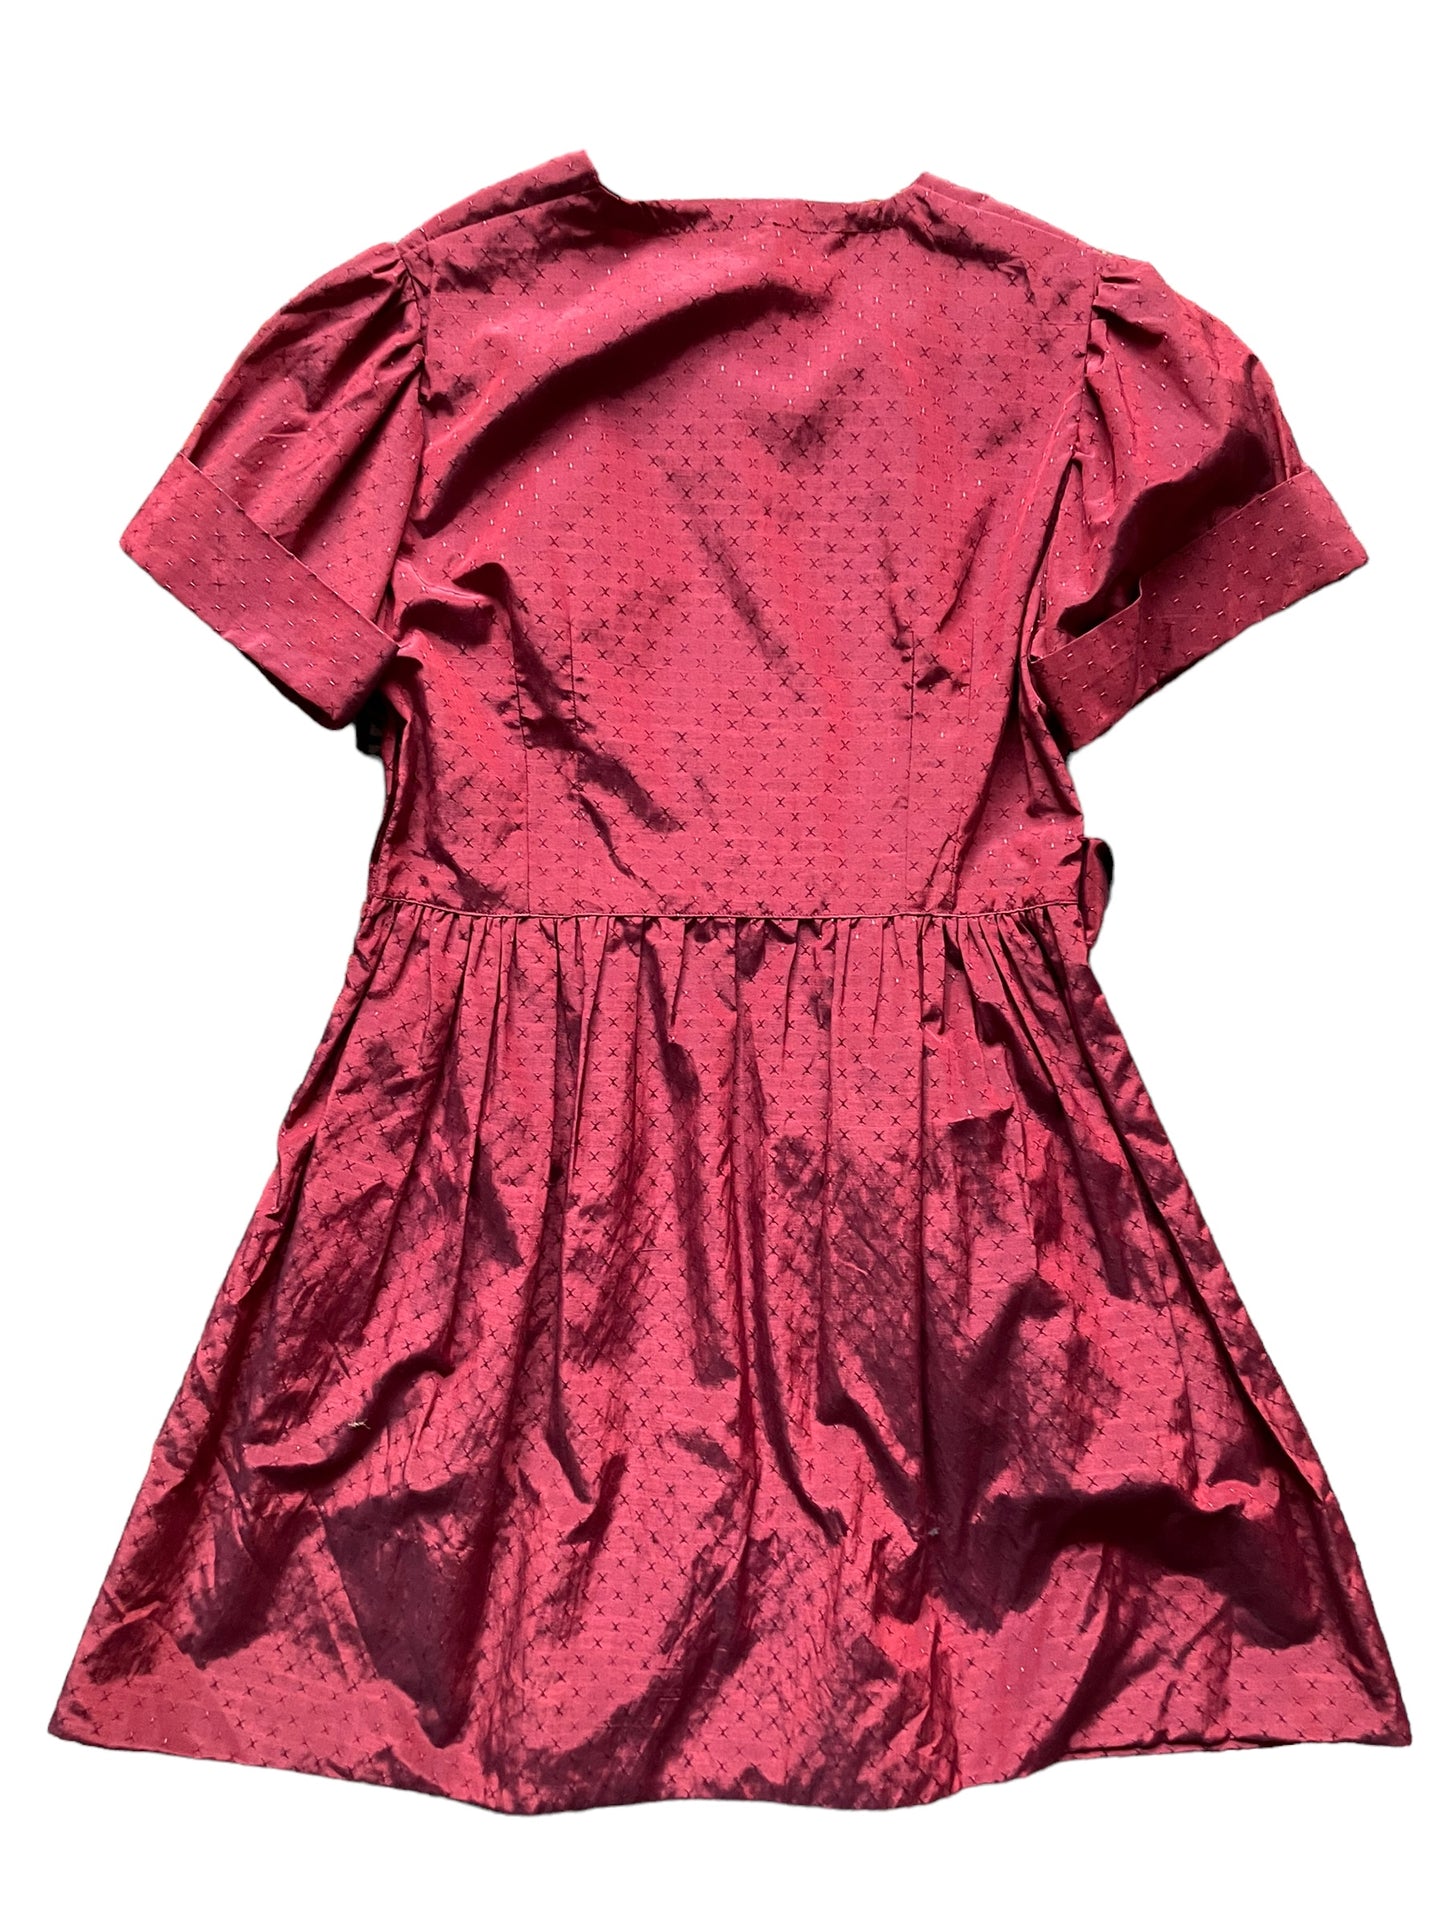 Full back view of Vintage 1950s Handmade Red Satin Dress  SZ M |  Barn Owl Vintage Dresses | Seattle Ladies Vintage Clothing